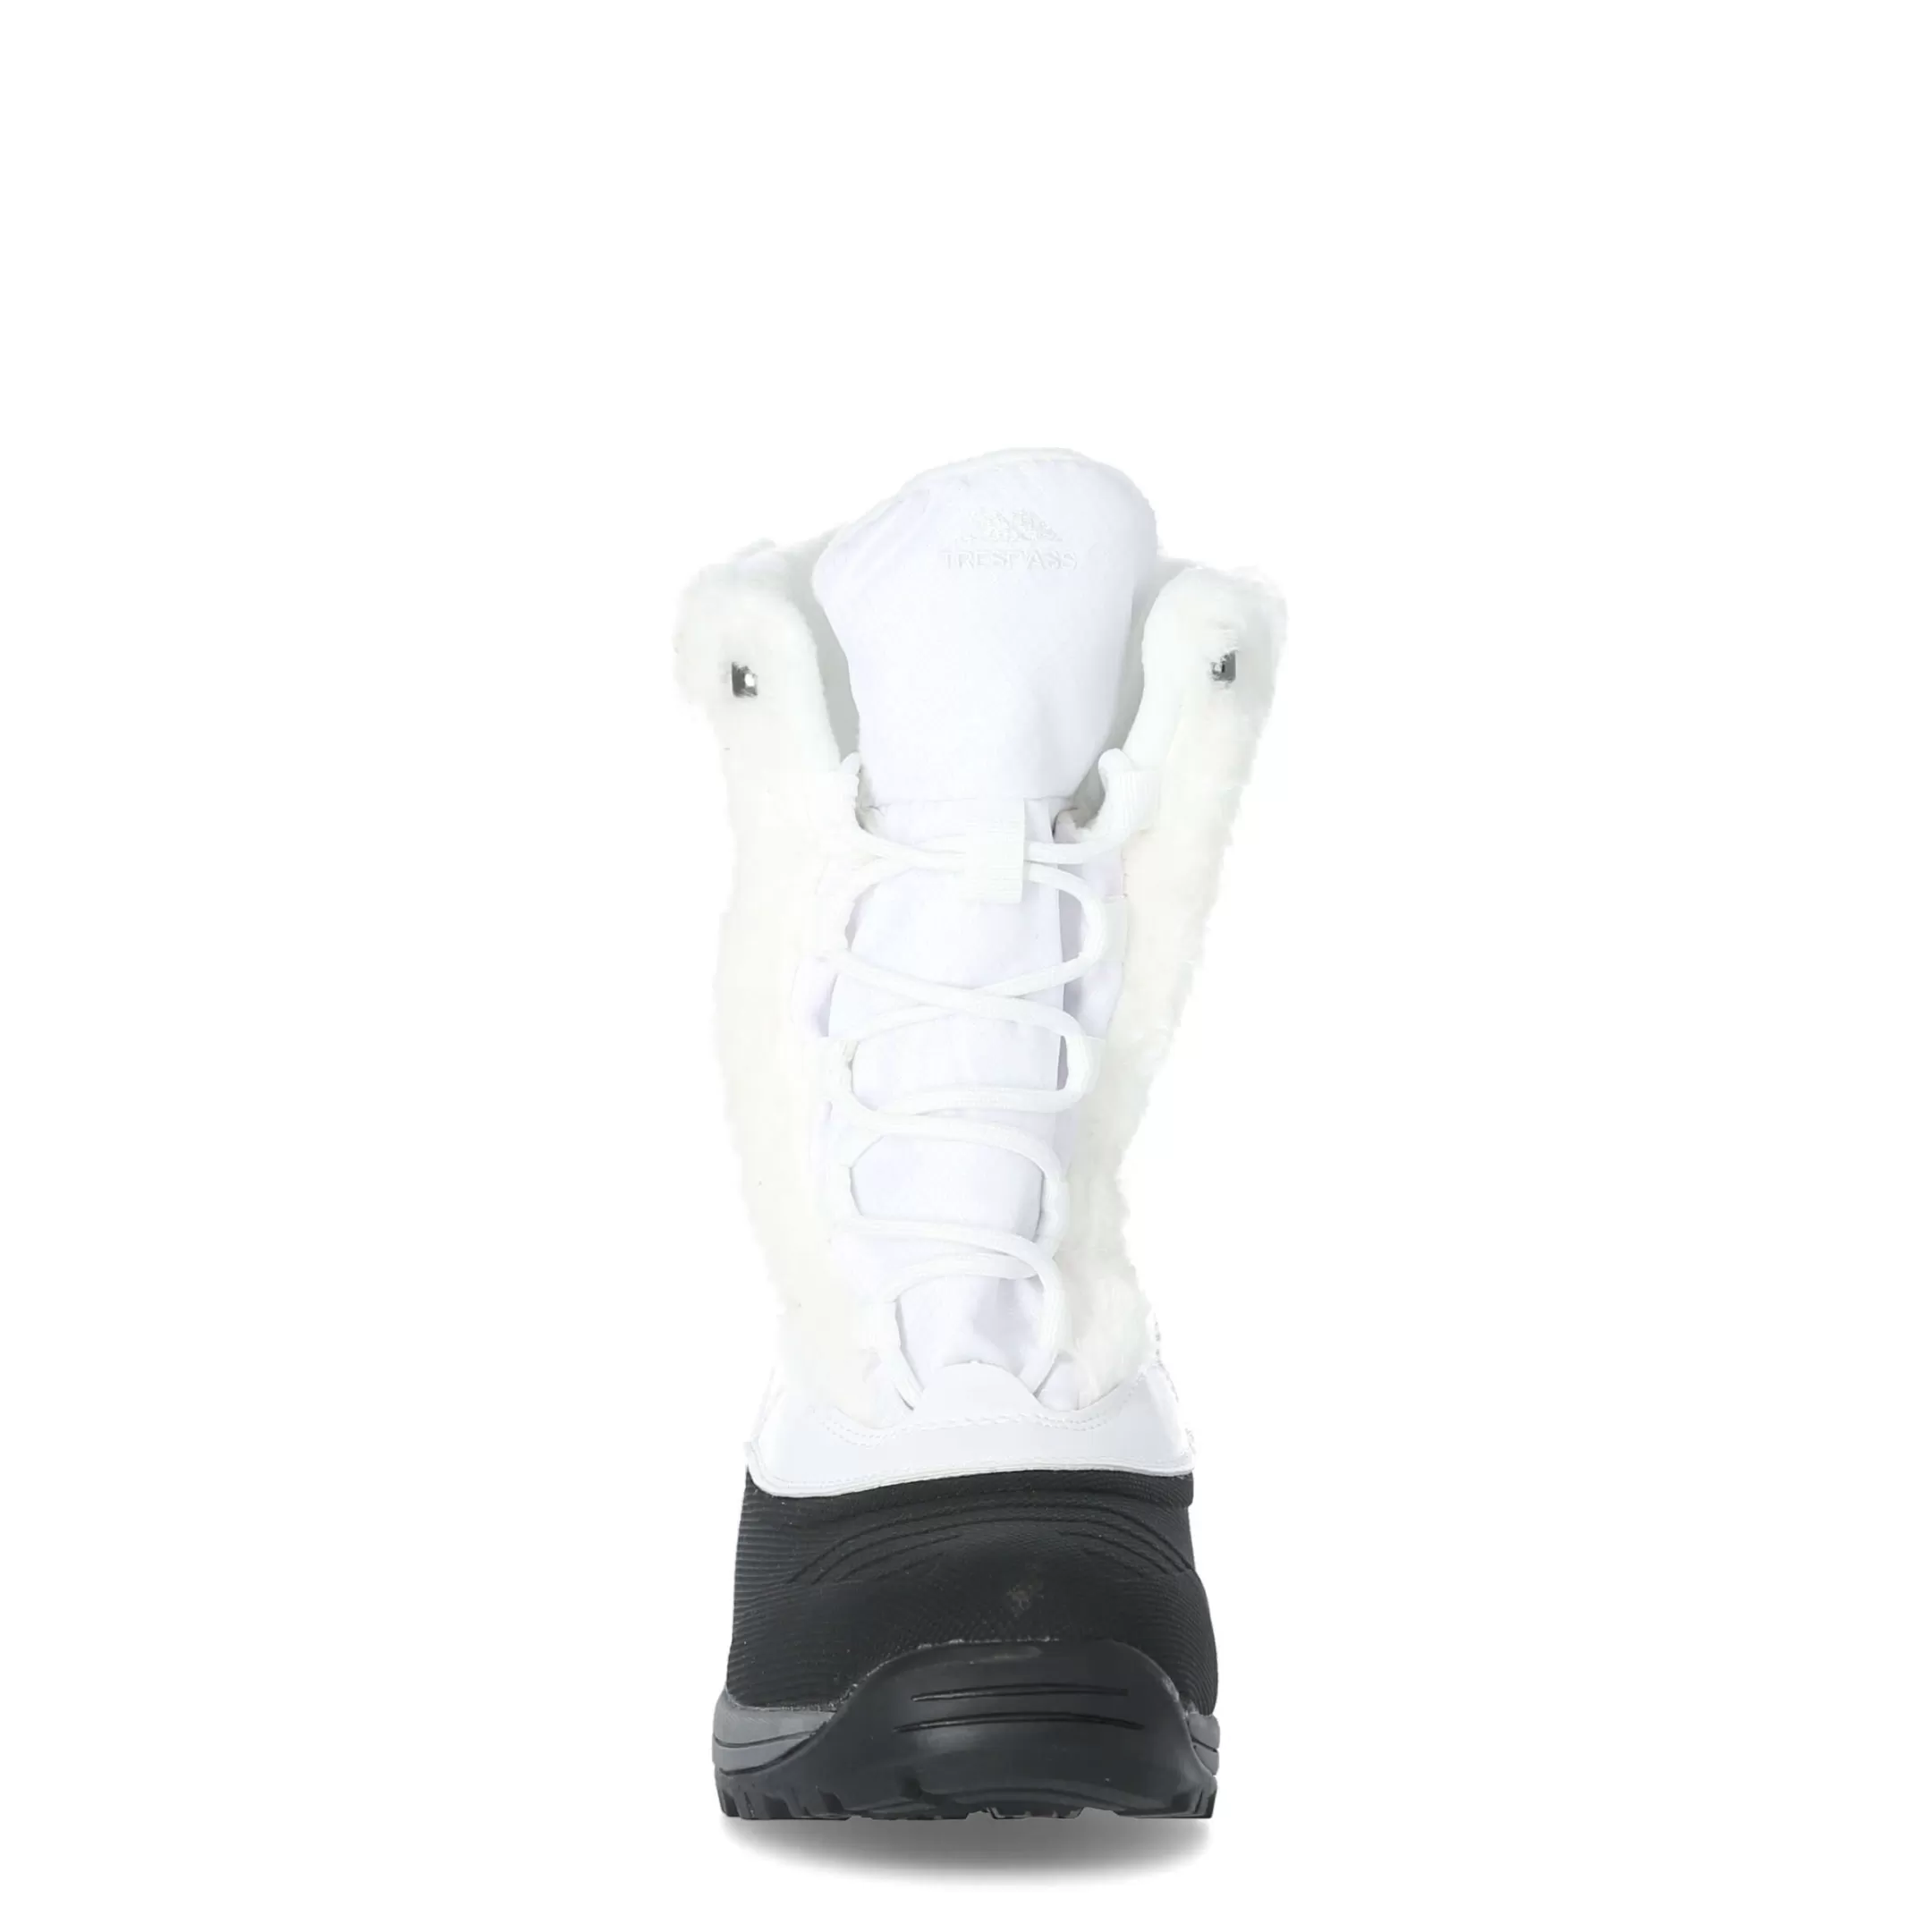 Womens Fleece Lined Waterproof Snow Boots Stalagmite II | Trespass Fashion